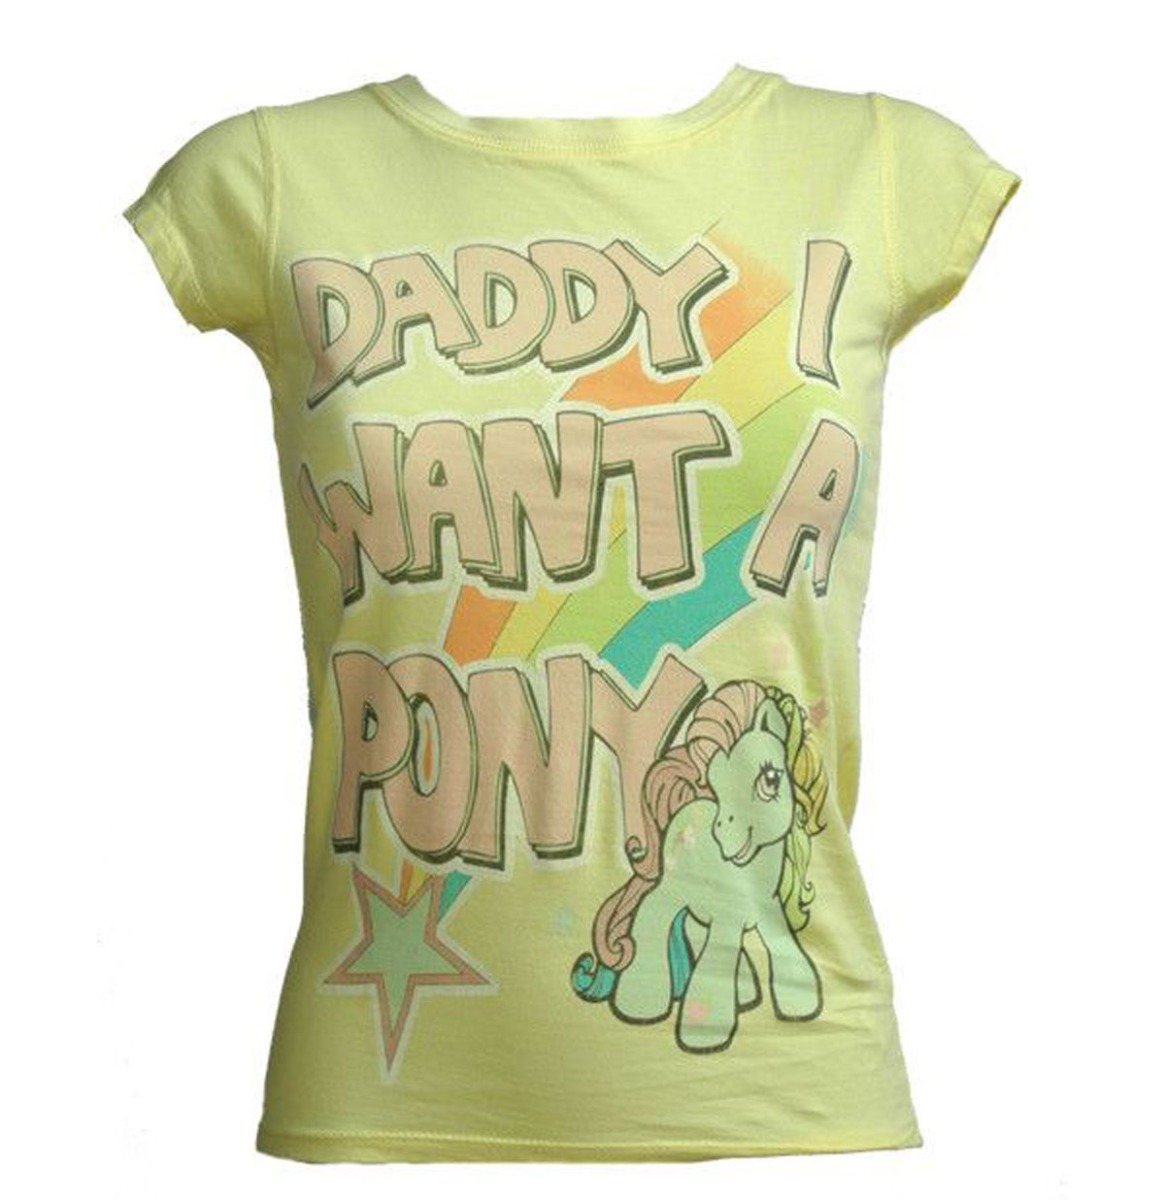 Daddy I Want A Pony Dames Shirt